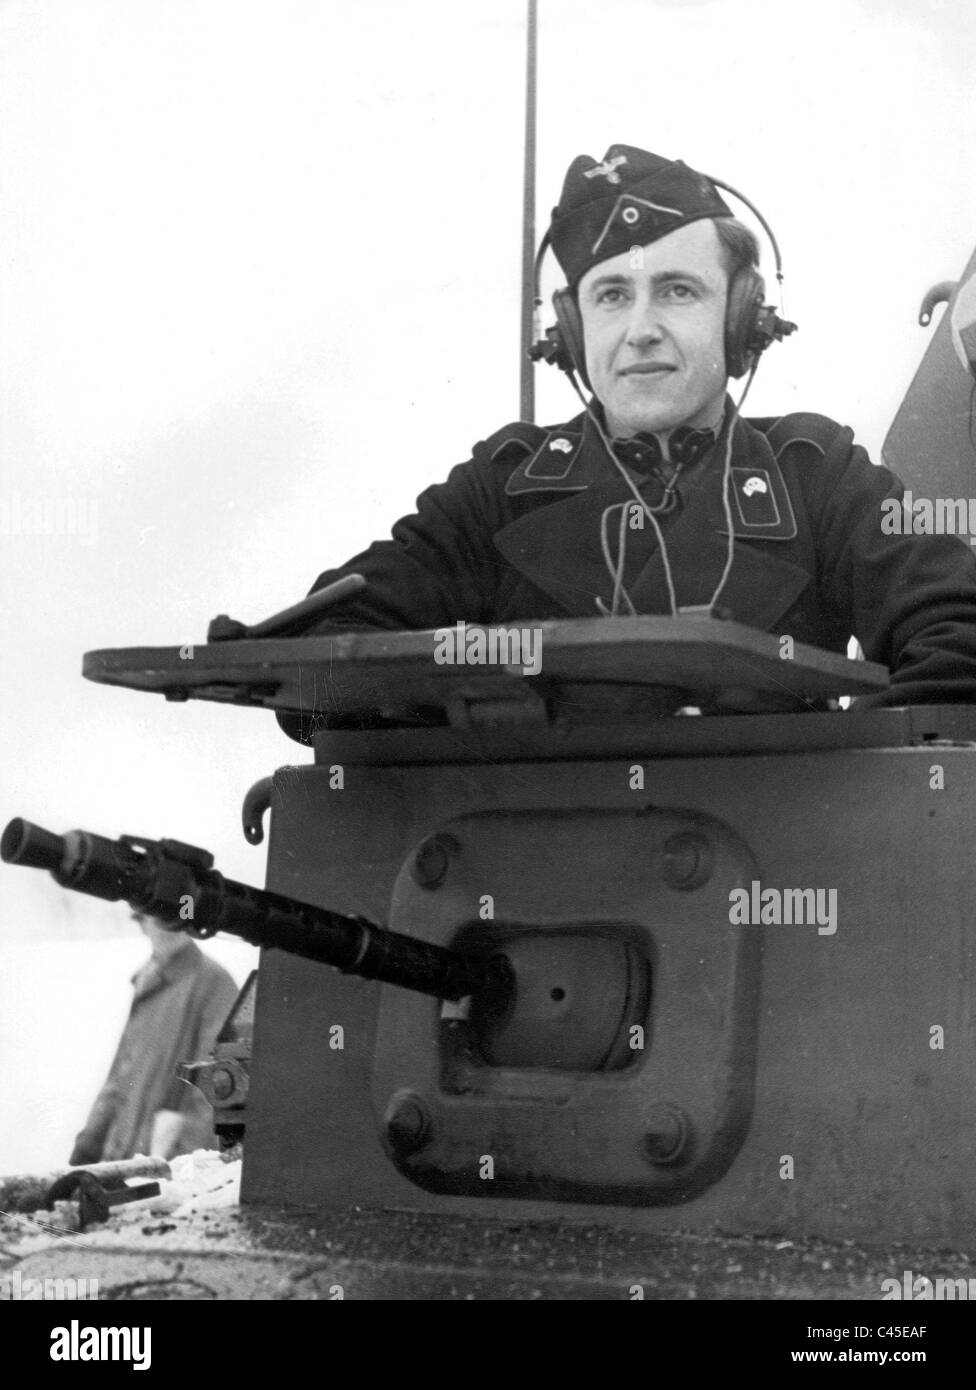 Tank crew - radio operator Stock Photo - Alamy